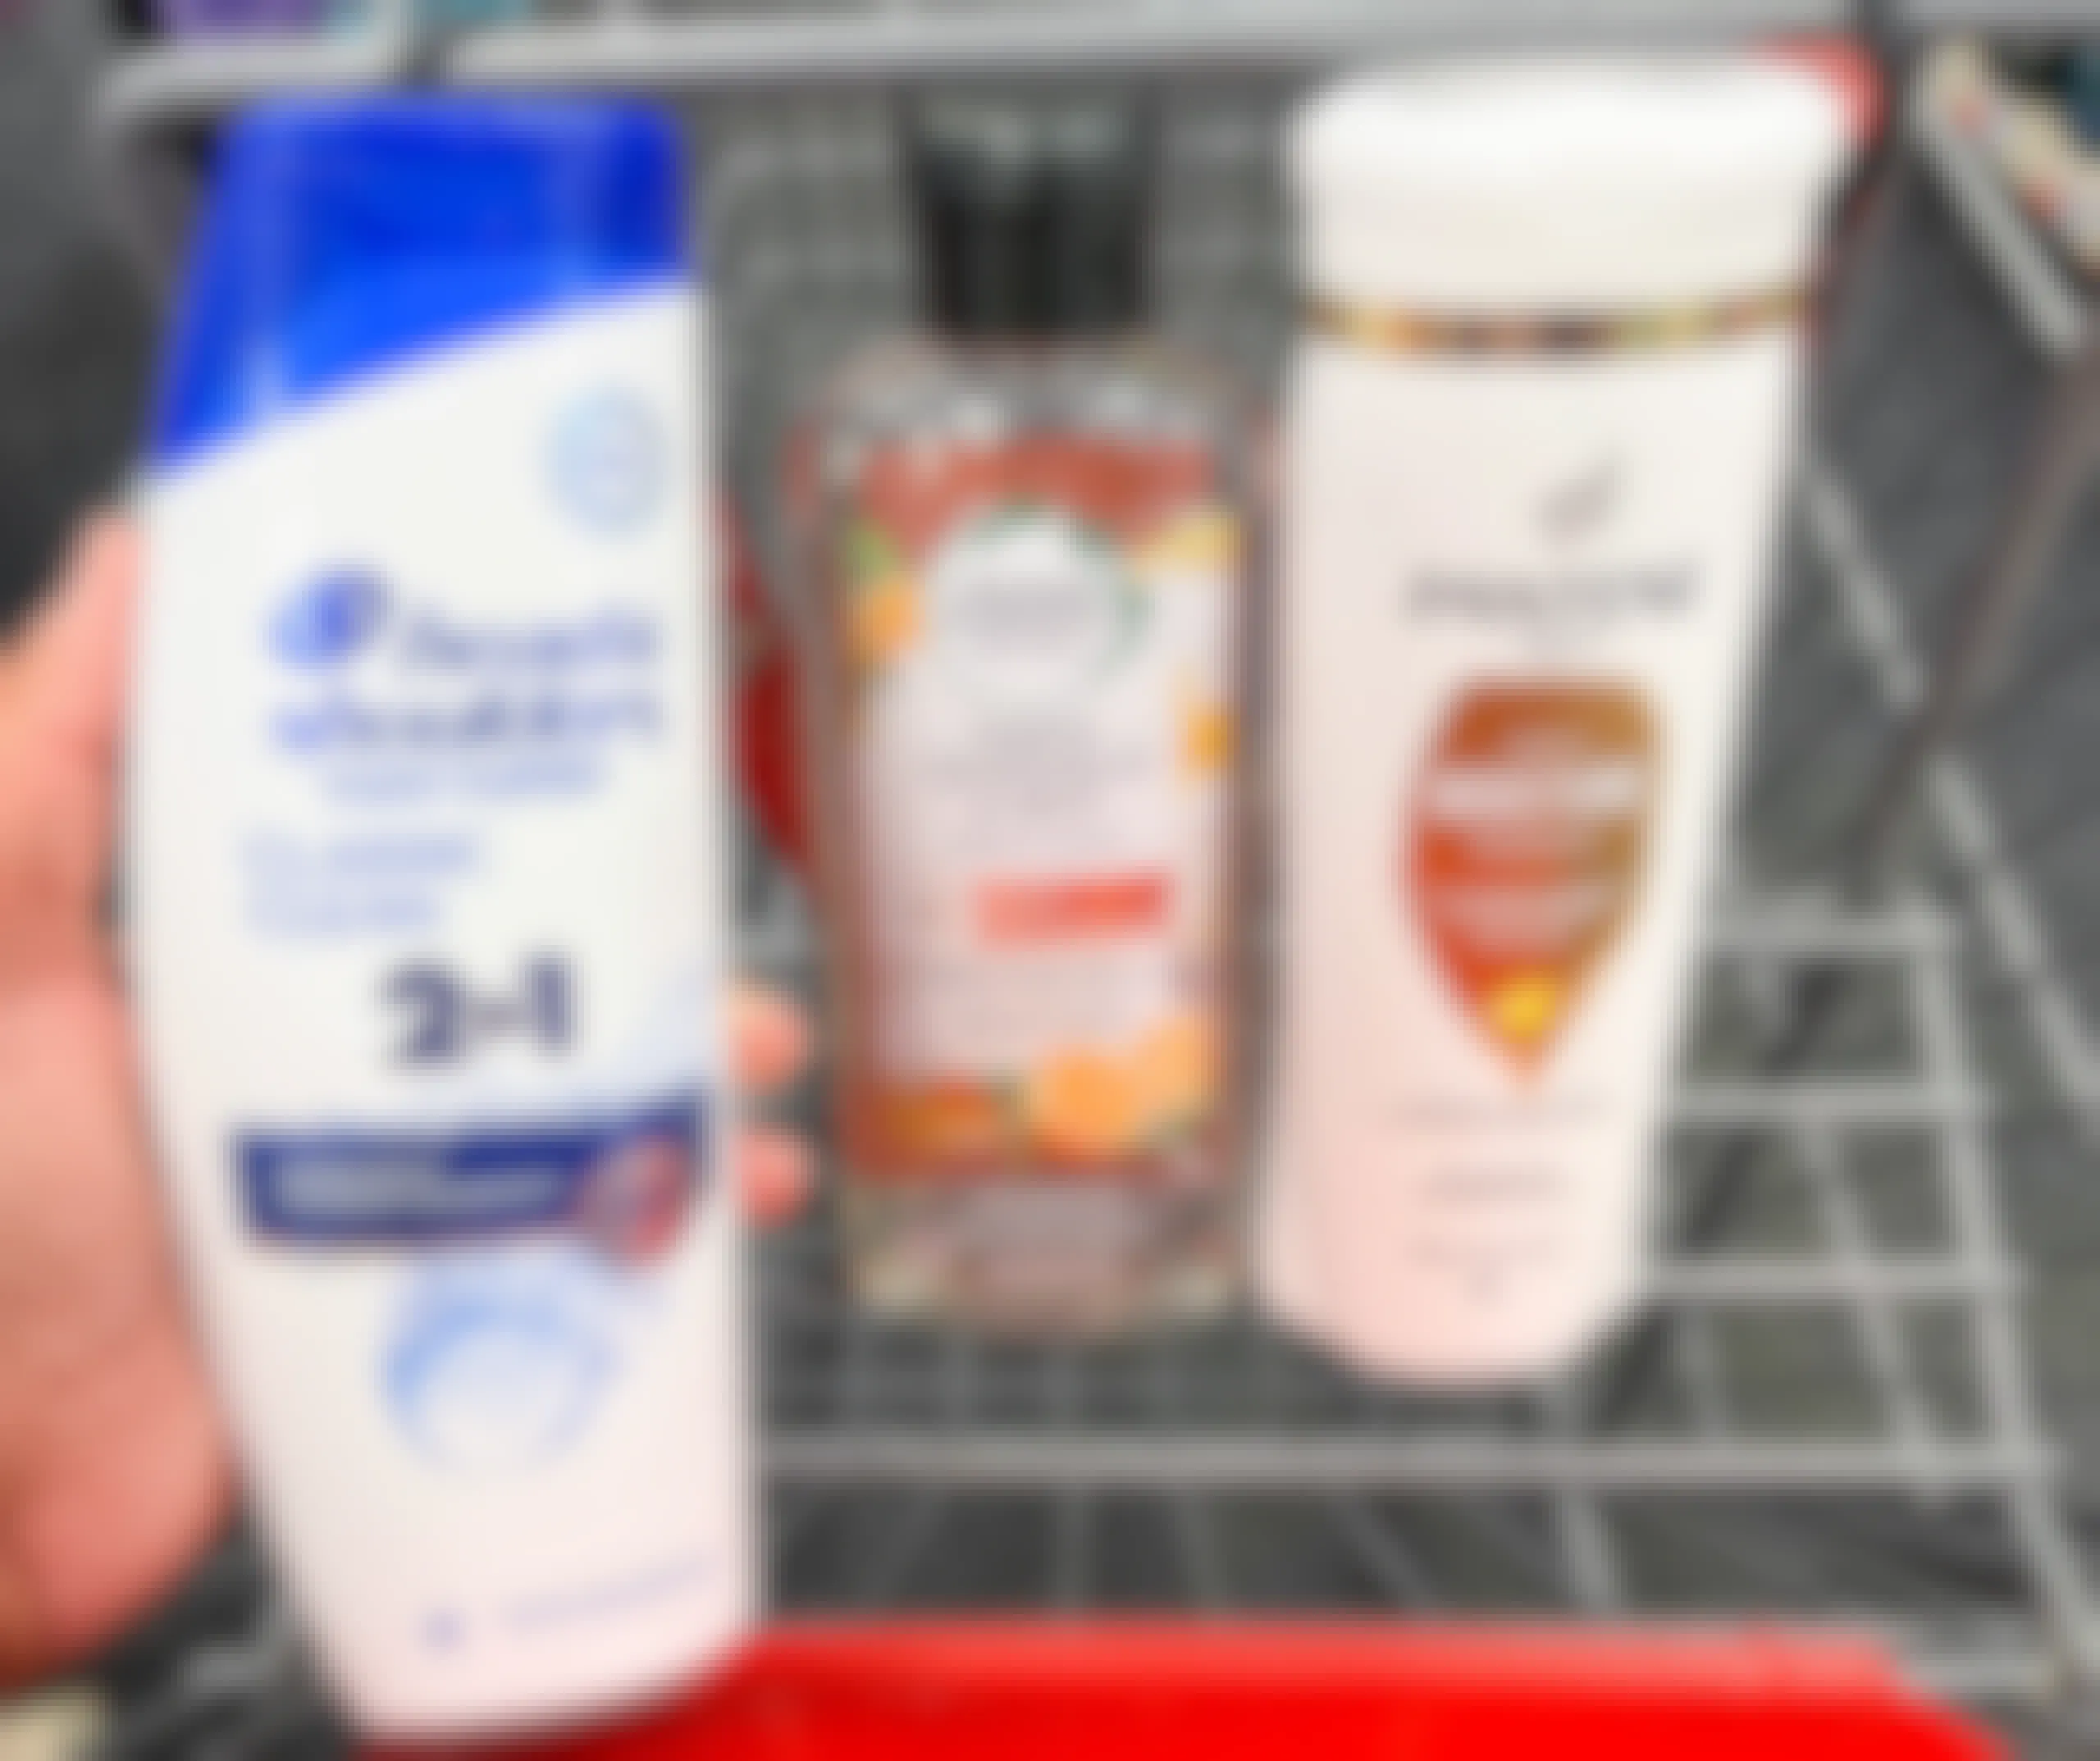 hand holding one bottle of head & shoulders shampoo, herbal essences shampoo, and Pantene shampoo in shopping cart